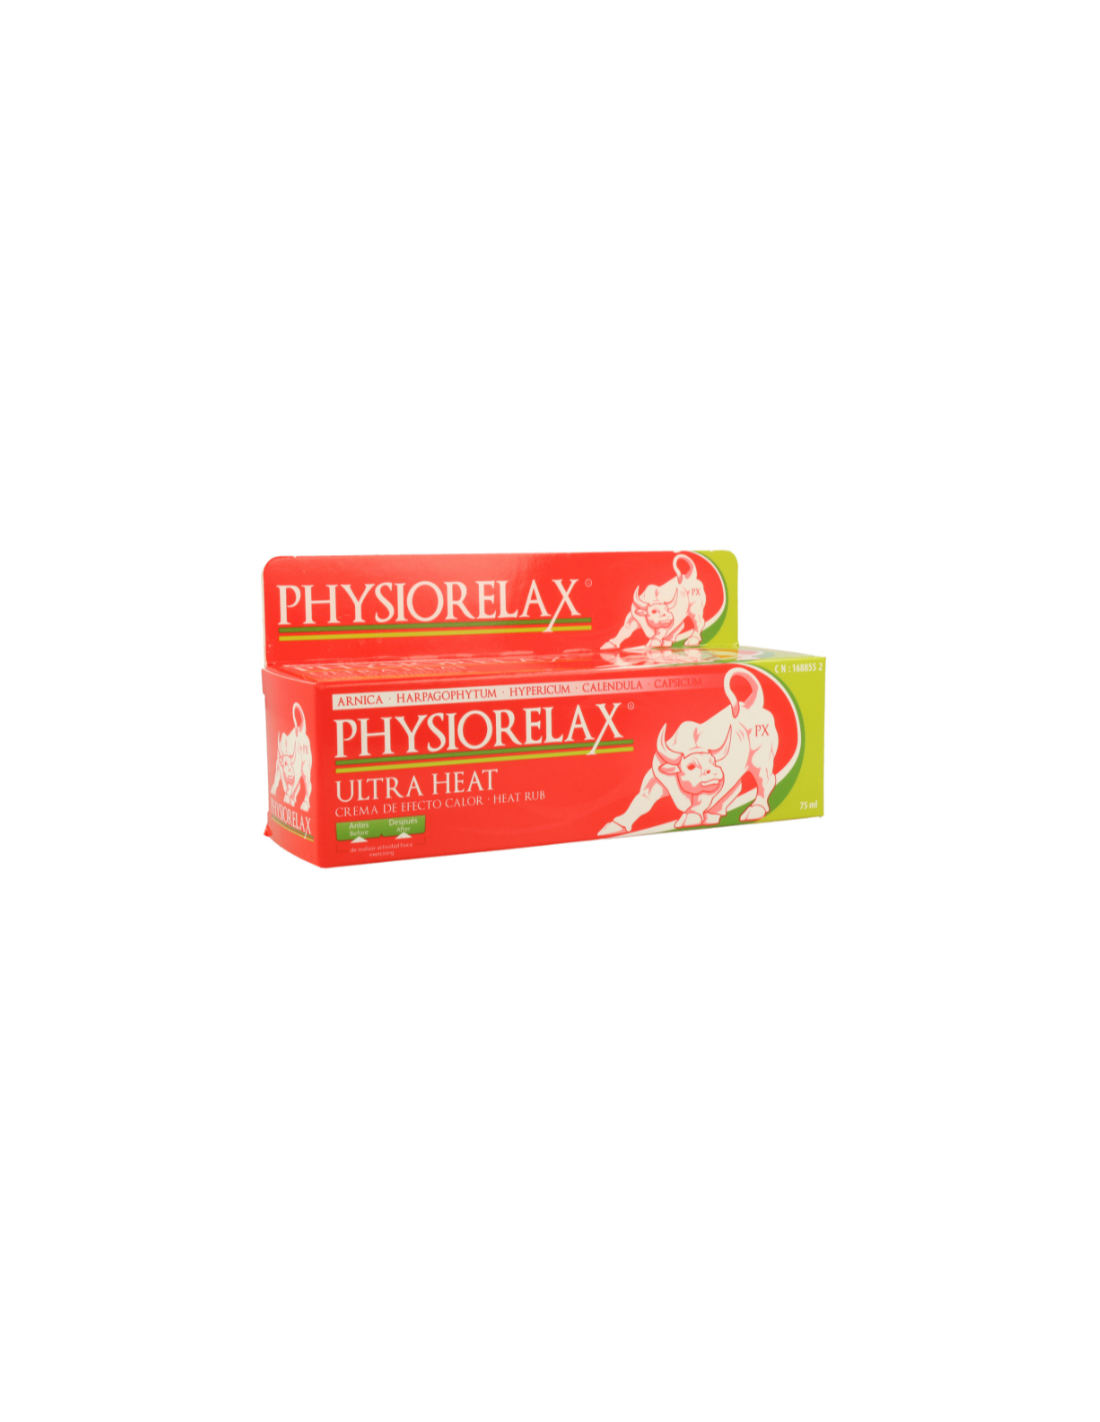 Physiorelax Ultra Heat Plus Crema Efecto Calor 250ml